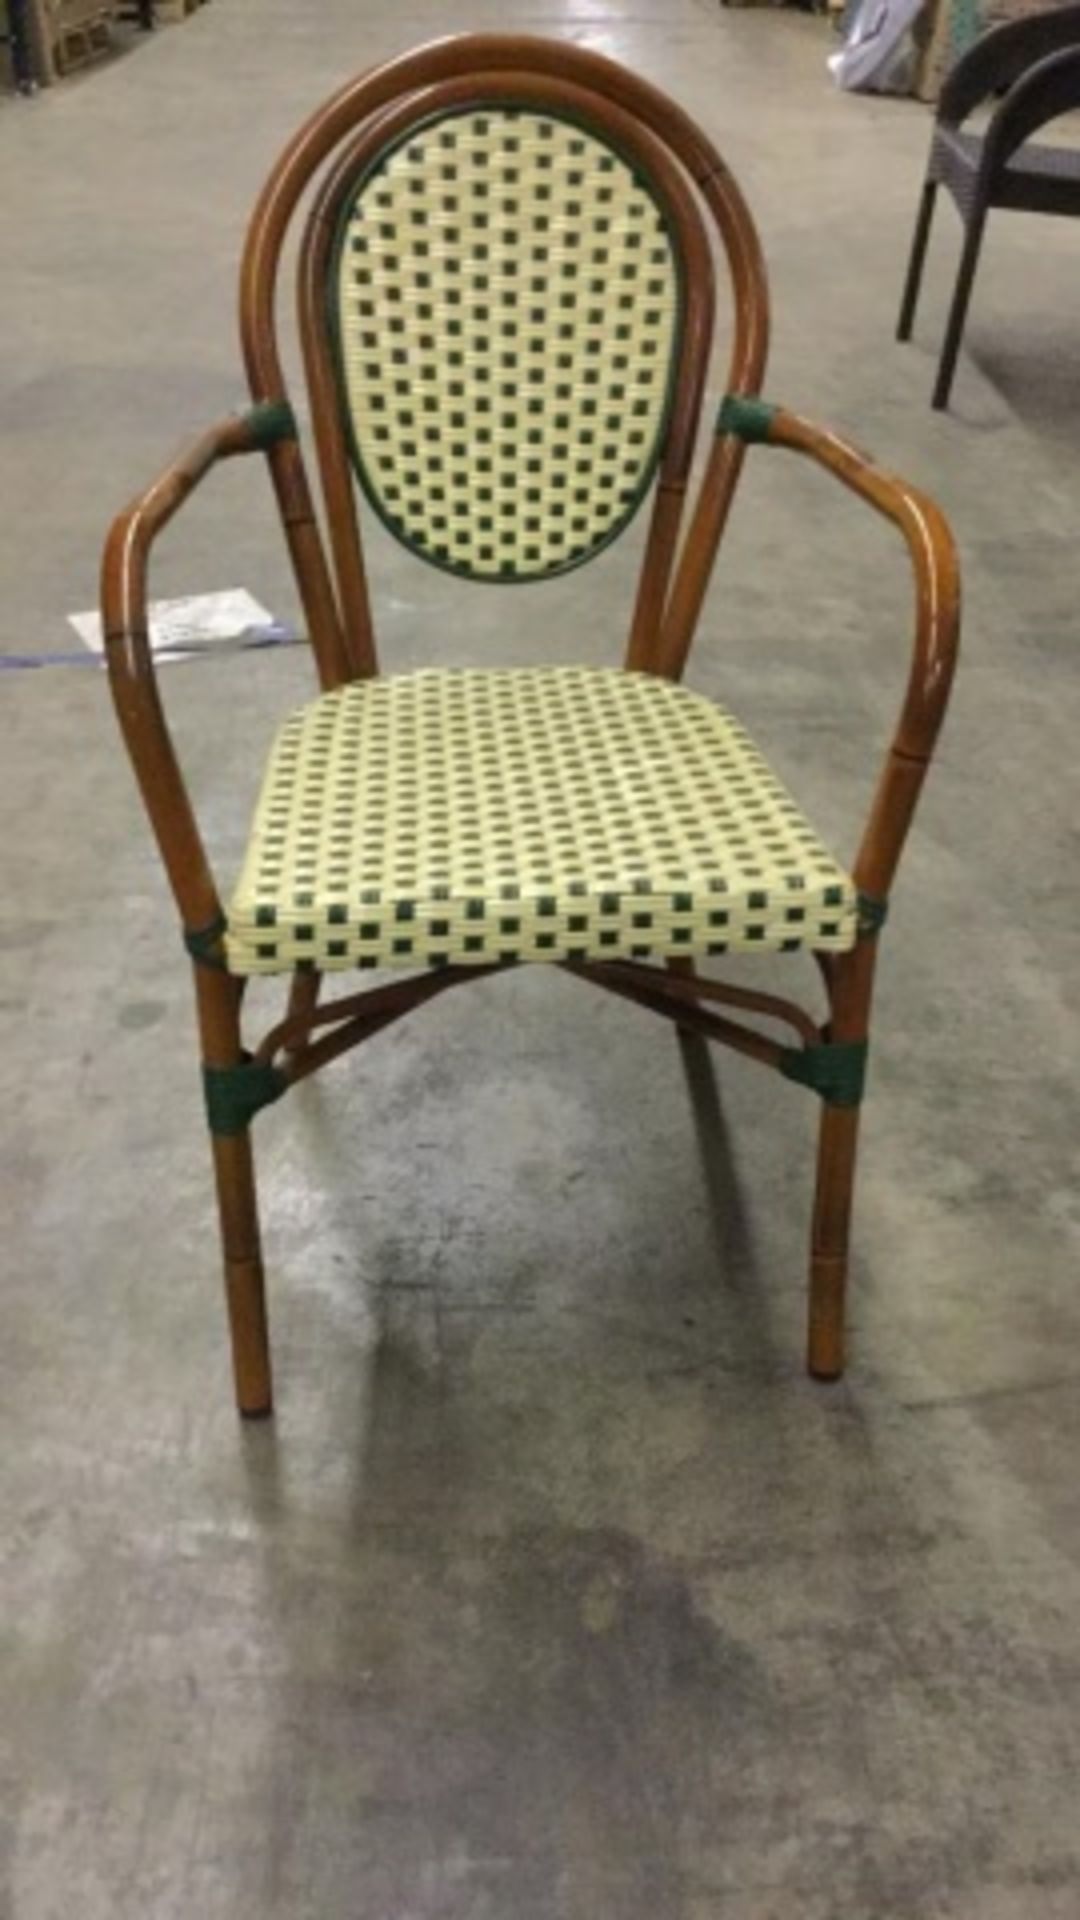 Parisienne Arm Chair - Ivory/Green. A57-AC-IG, PE Weave on Tubular Aluminum Frame/Powder coat finish - Image 3 of 6